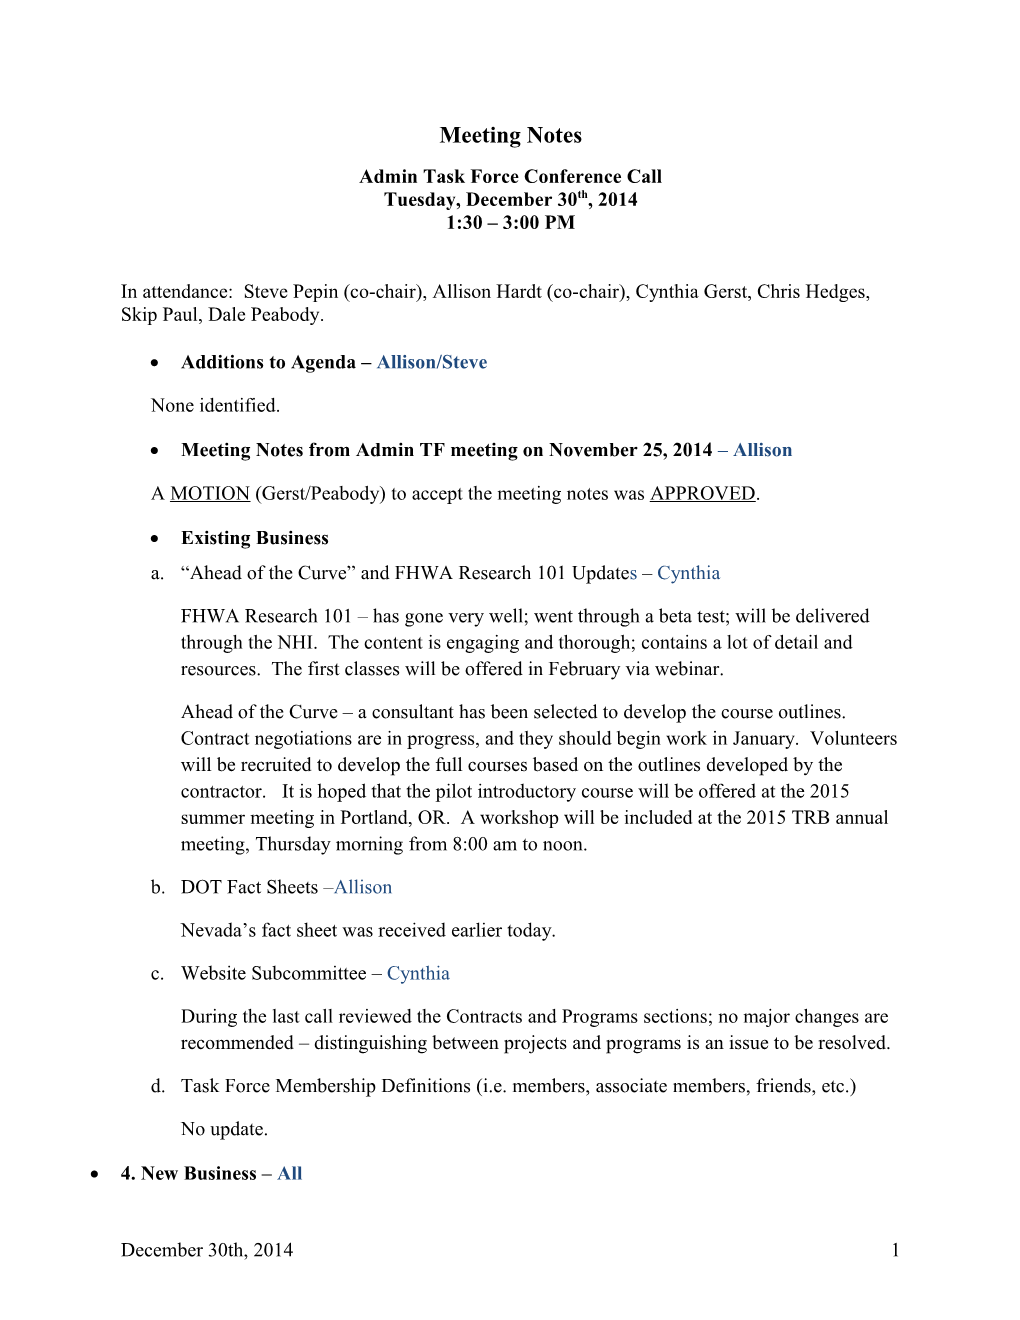 Admin TF Meeting Notes: December 30, 2014